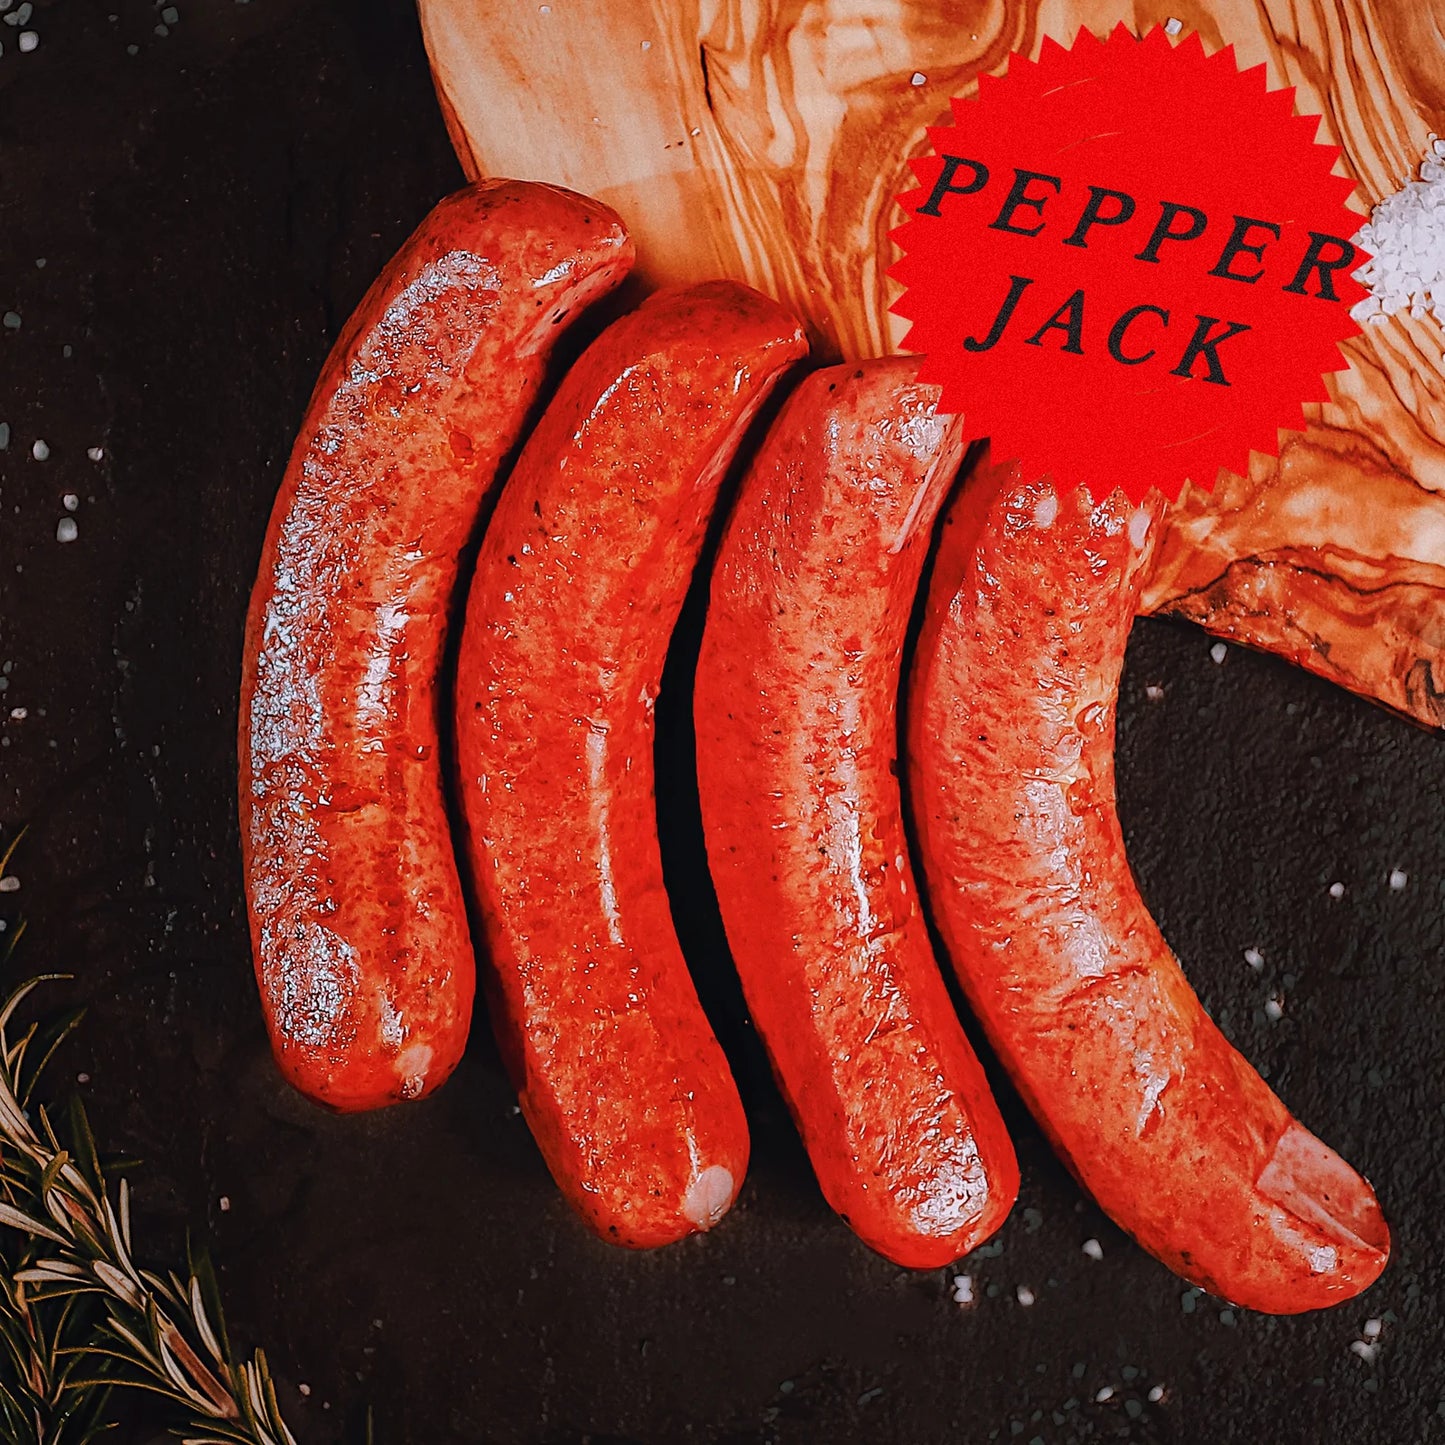 Wagyu SMOKED LINKS: PEPPER JACK